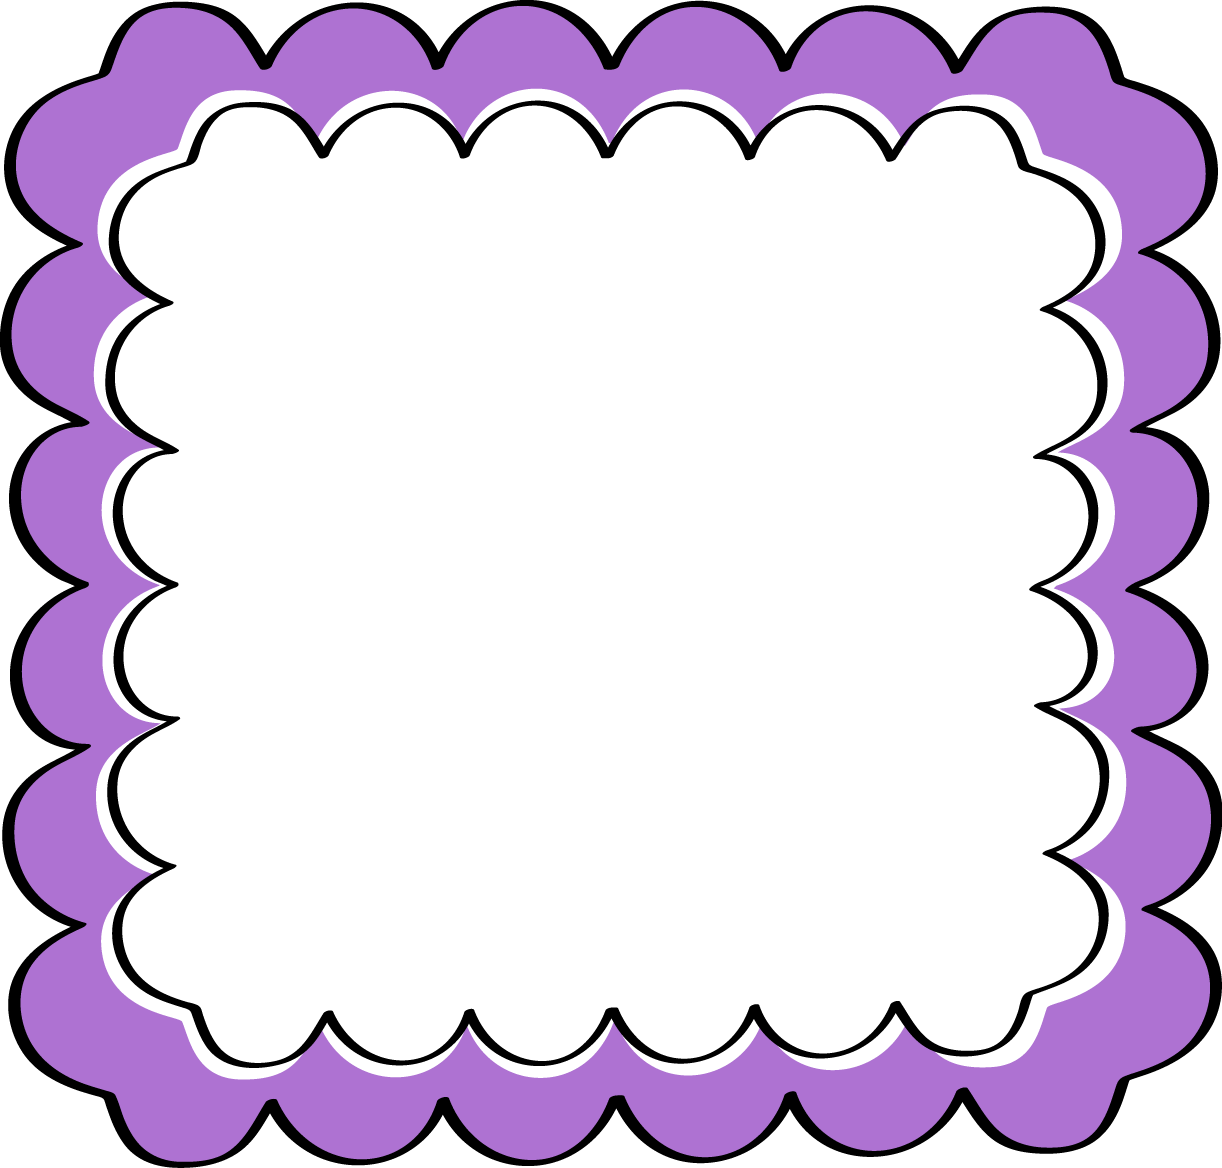 clip art border designs amazing clip art purple and black frame ...